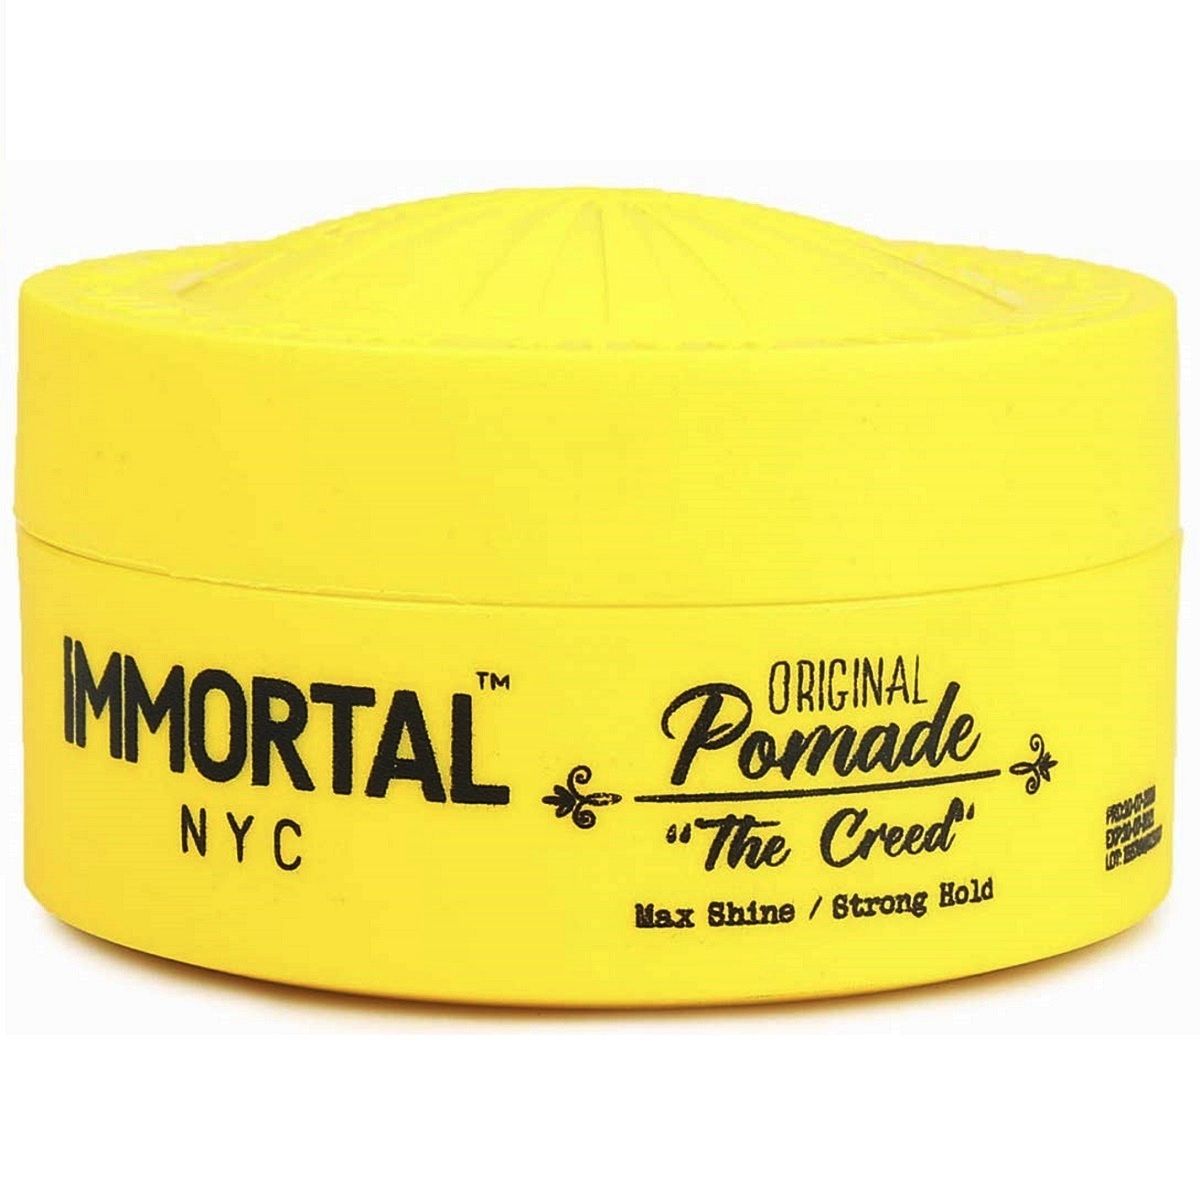 Immortal NYC Original Pomade - The Creed 5.07oz